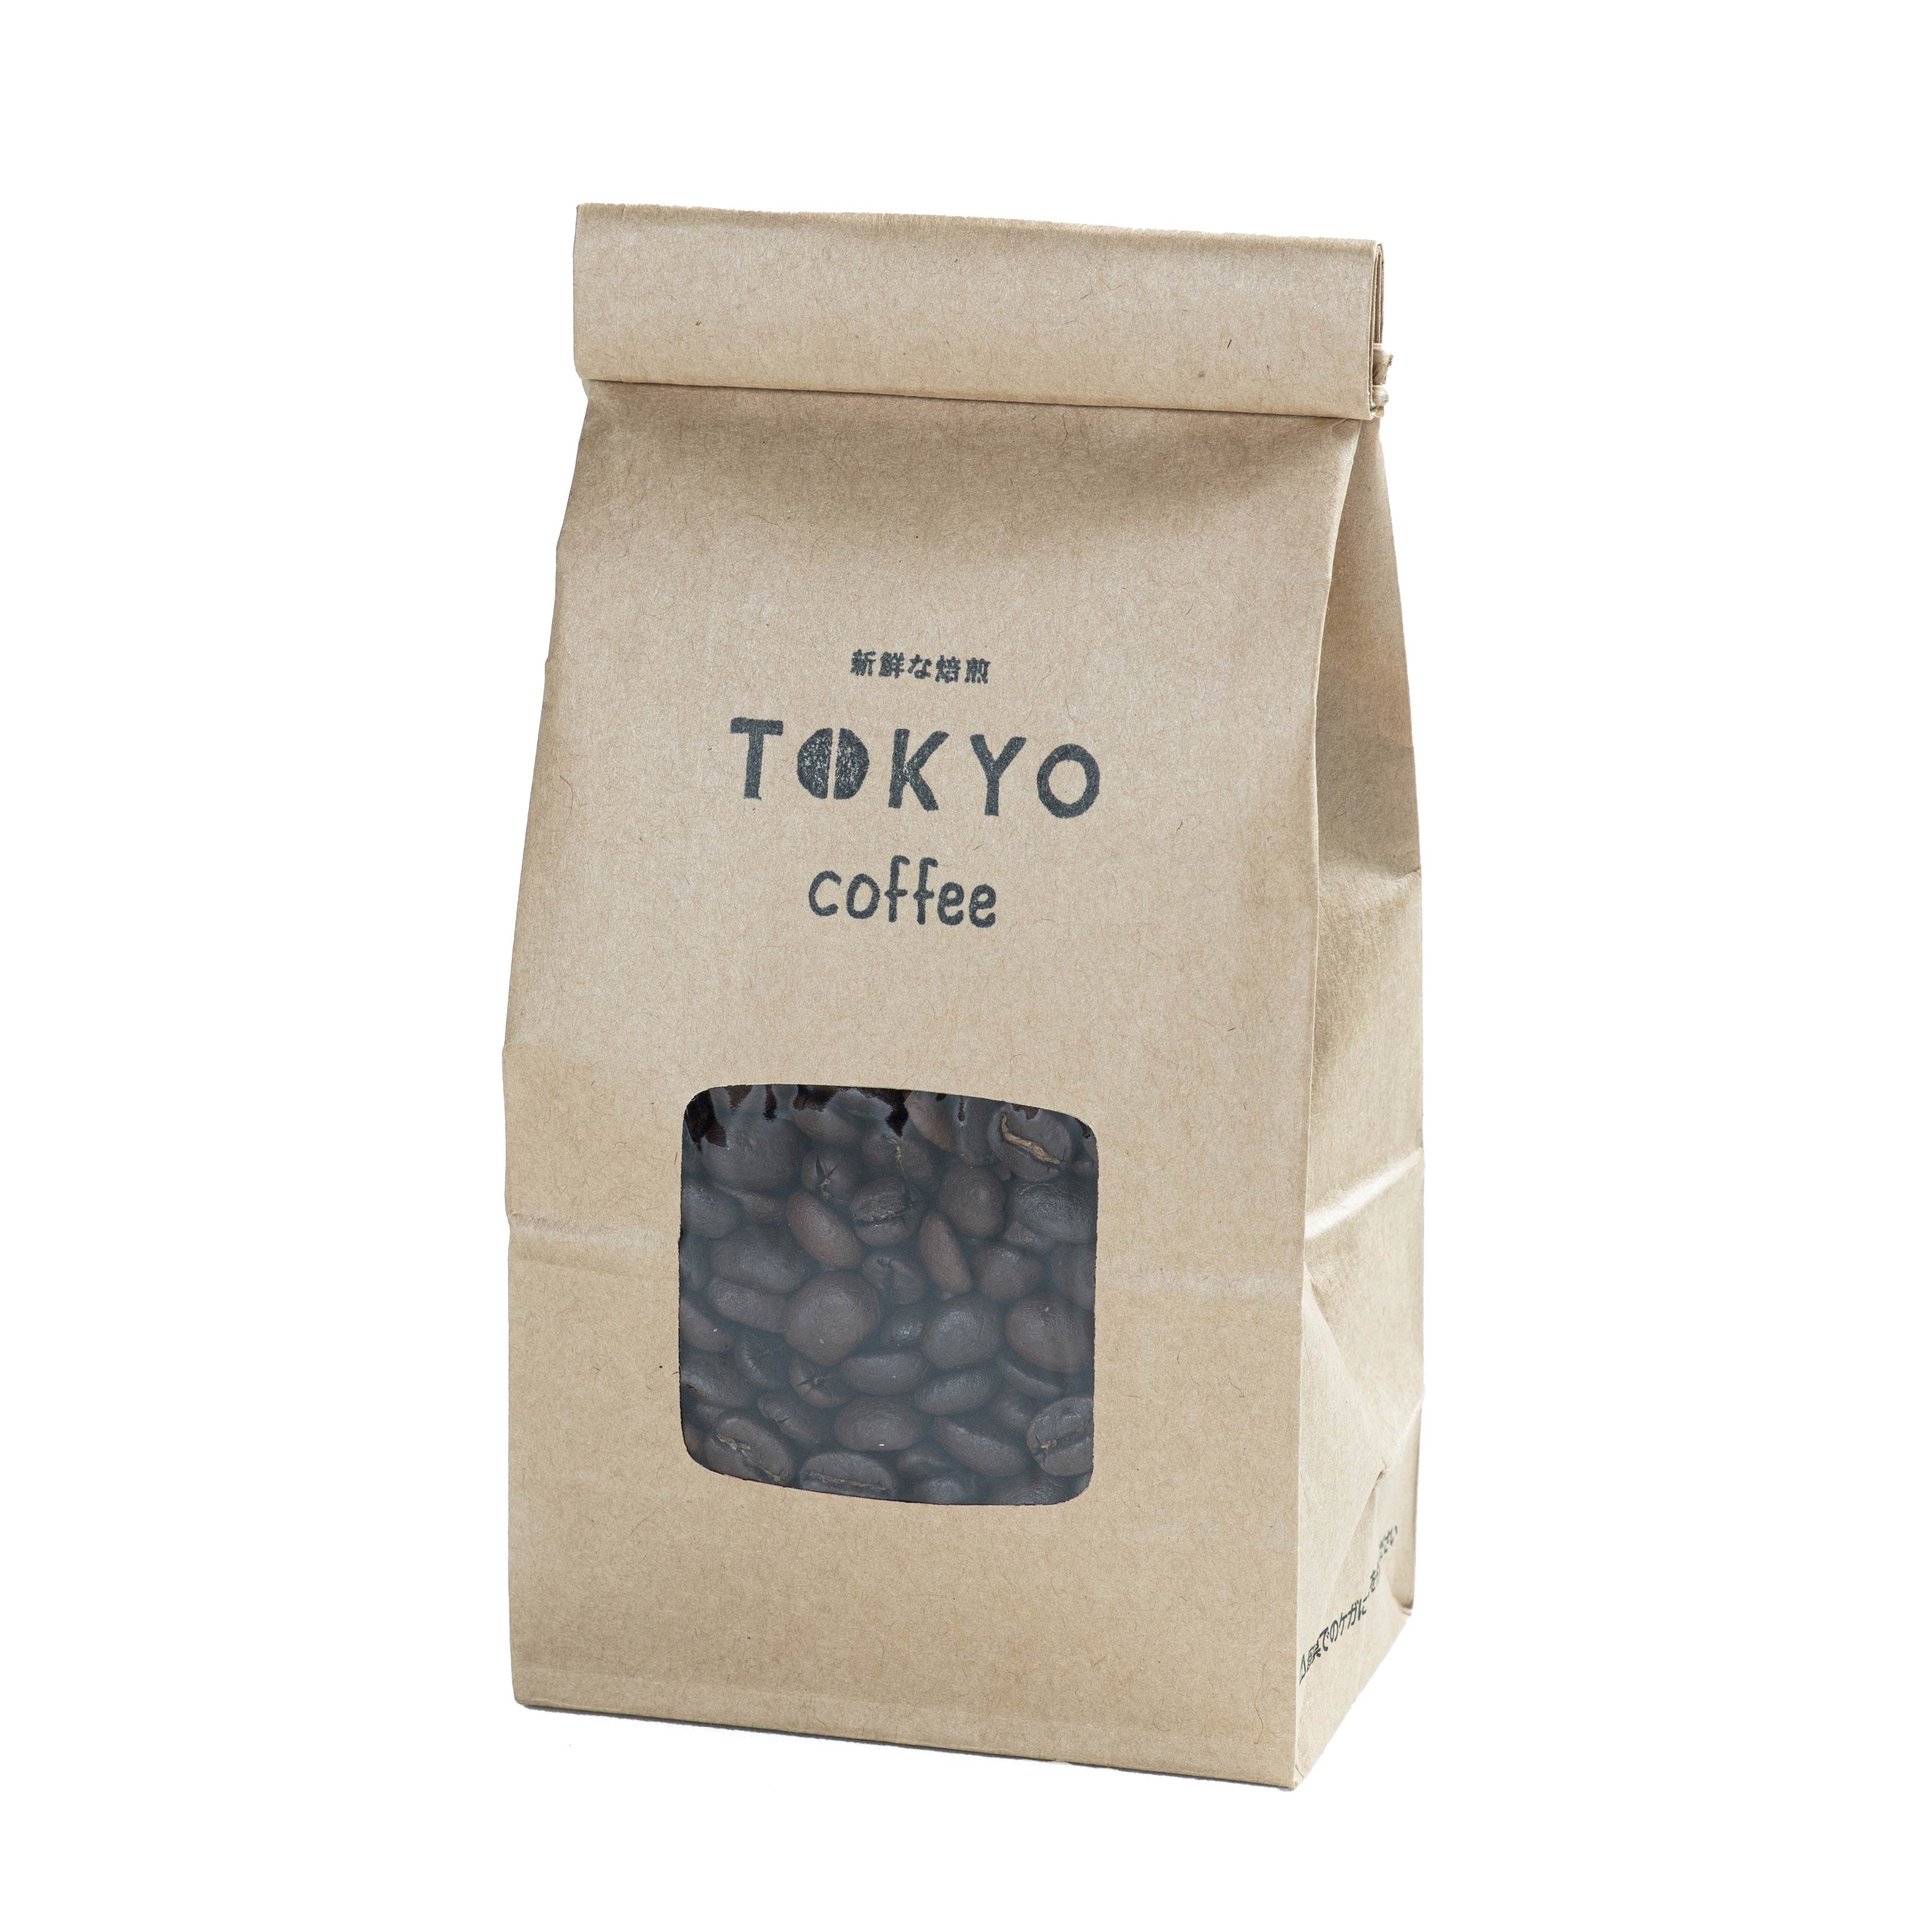 TOKYO COFFEE オーガニック コーヒー 東京コーヒーブレンド 400g  400gでコーヒー約28杯分｜ベストセラー オーガニック コーヒー 豆 有機コーヒー豆 ベストセラー コーヒー豆 ベストセラー 珈琲豆 有機珈琲 best seller